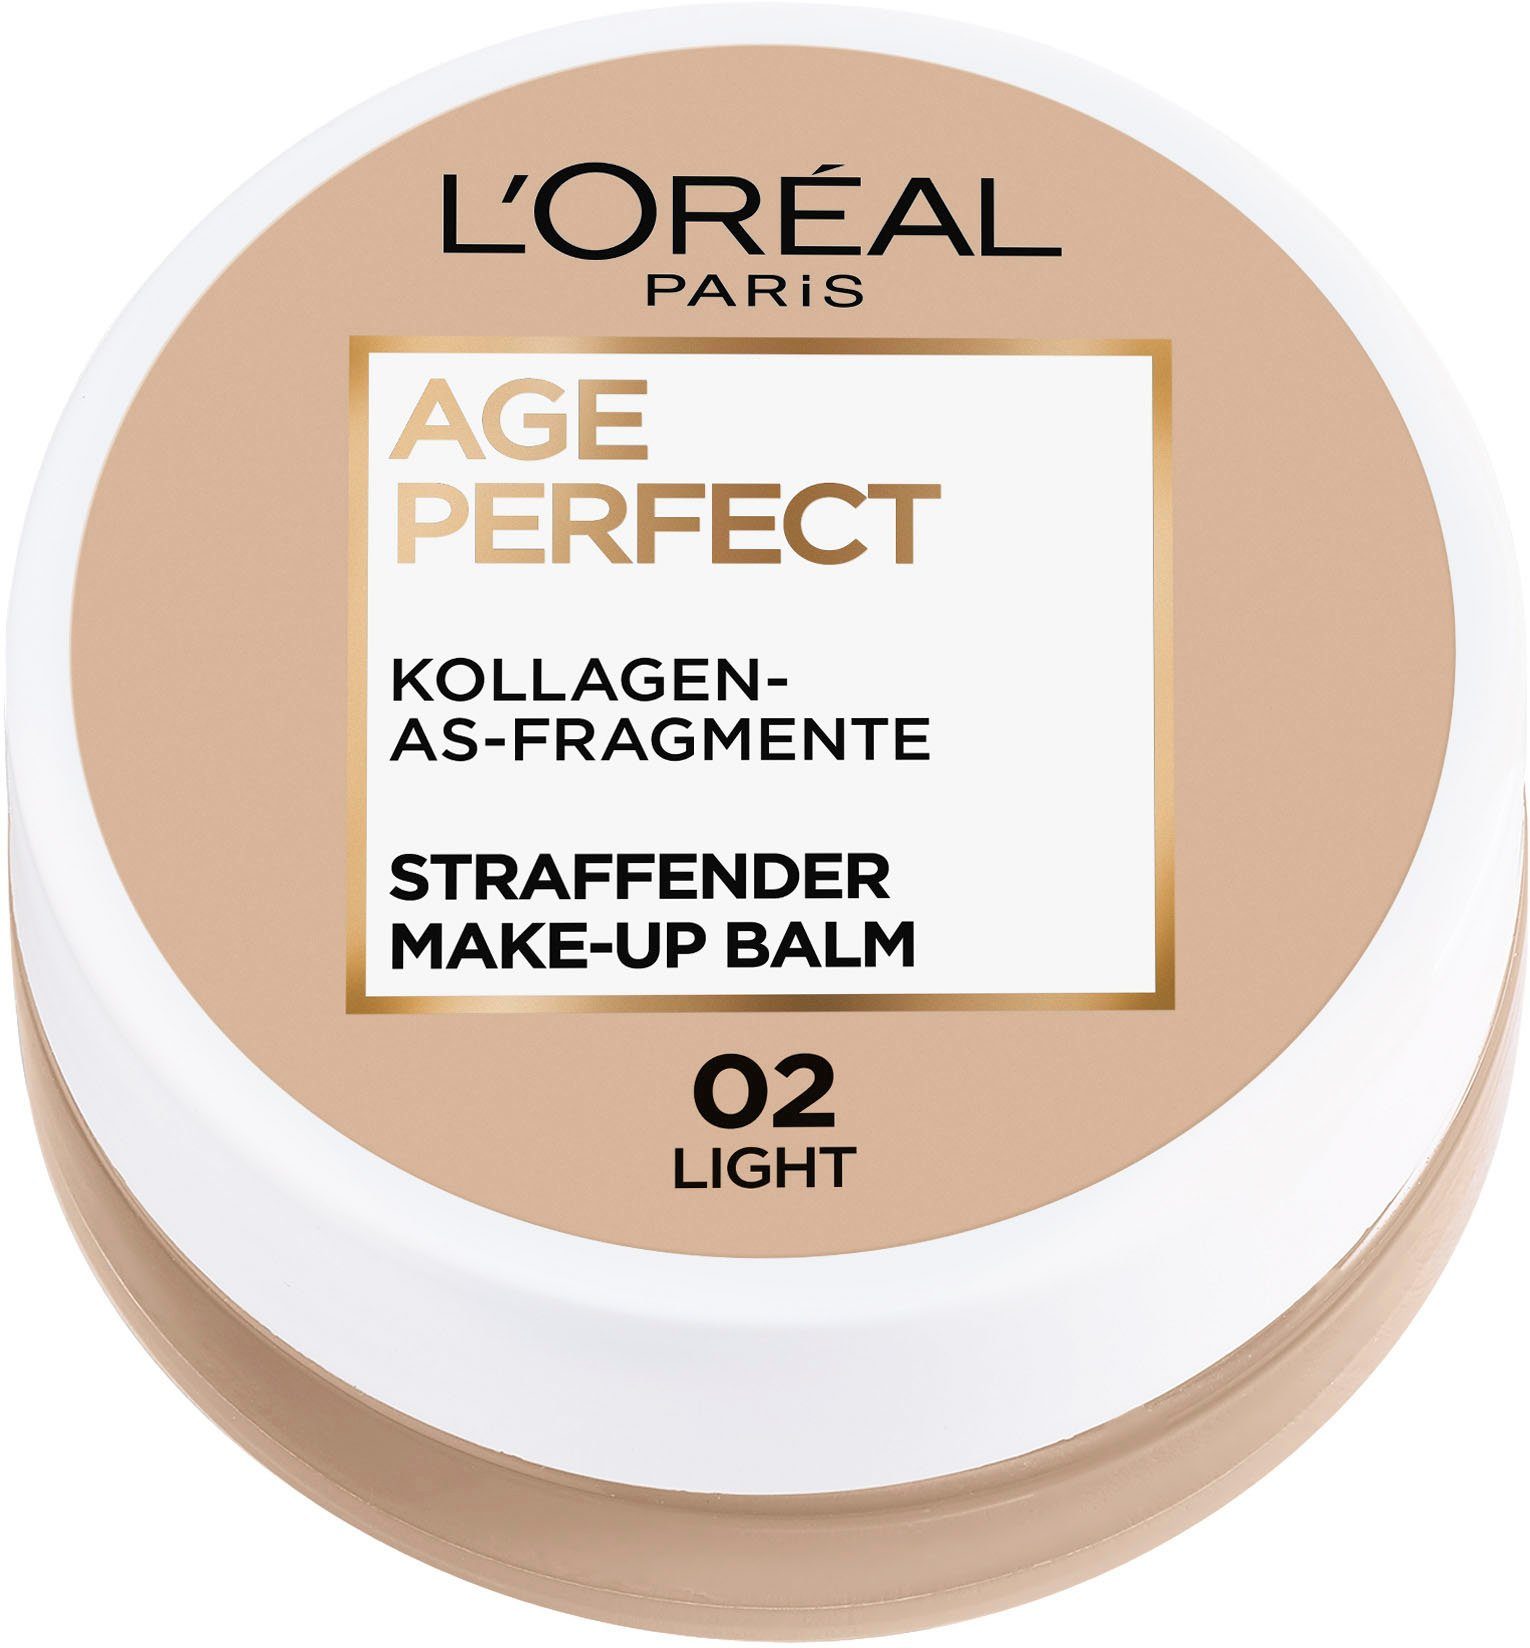 Perfect Perfect Balm, L'ORÉAL Balm Age Make-up Foundation Light Make-up Age 02 PARIS